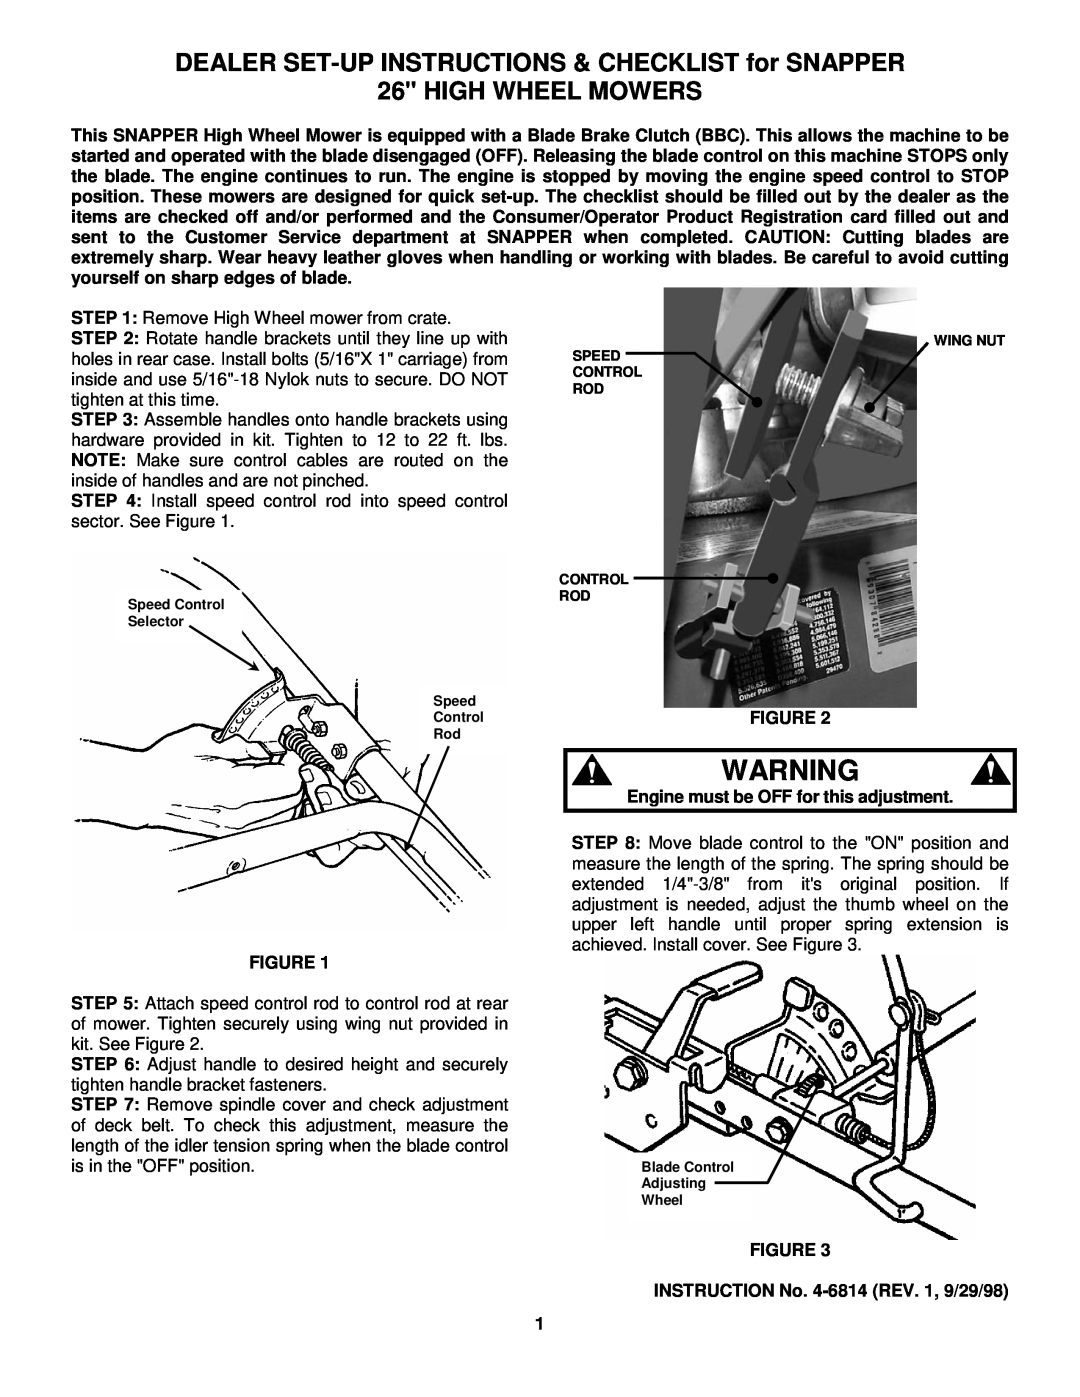 Snapper 4-6814 manual DEALER SET-UPINSTRUCTIONS & CHECKLIST for SNAPPER, High Wheel Mowers 